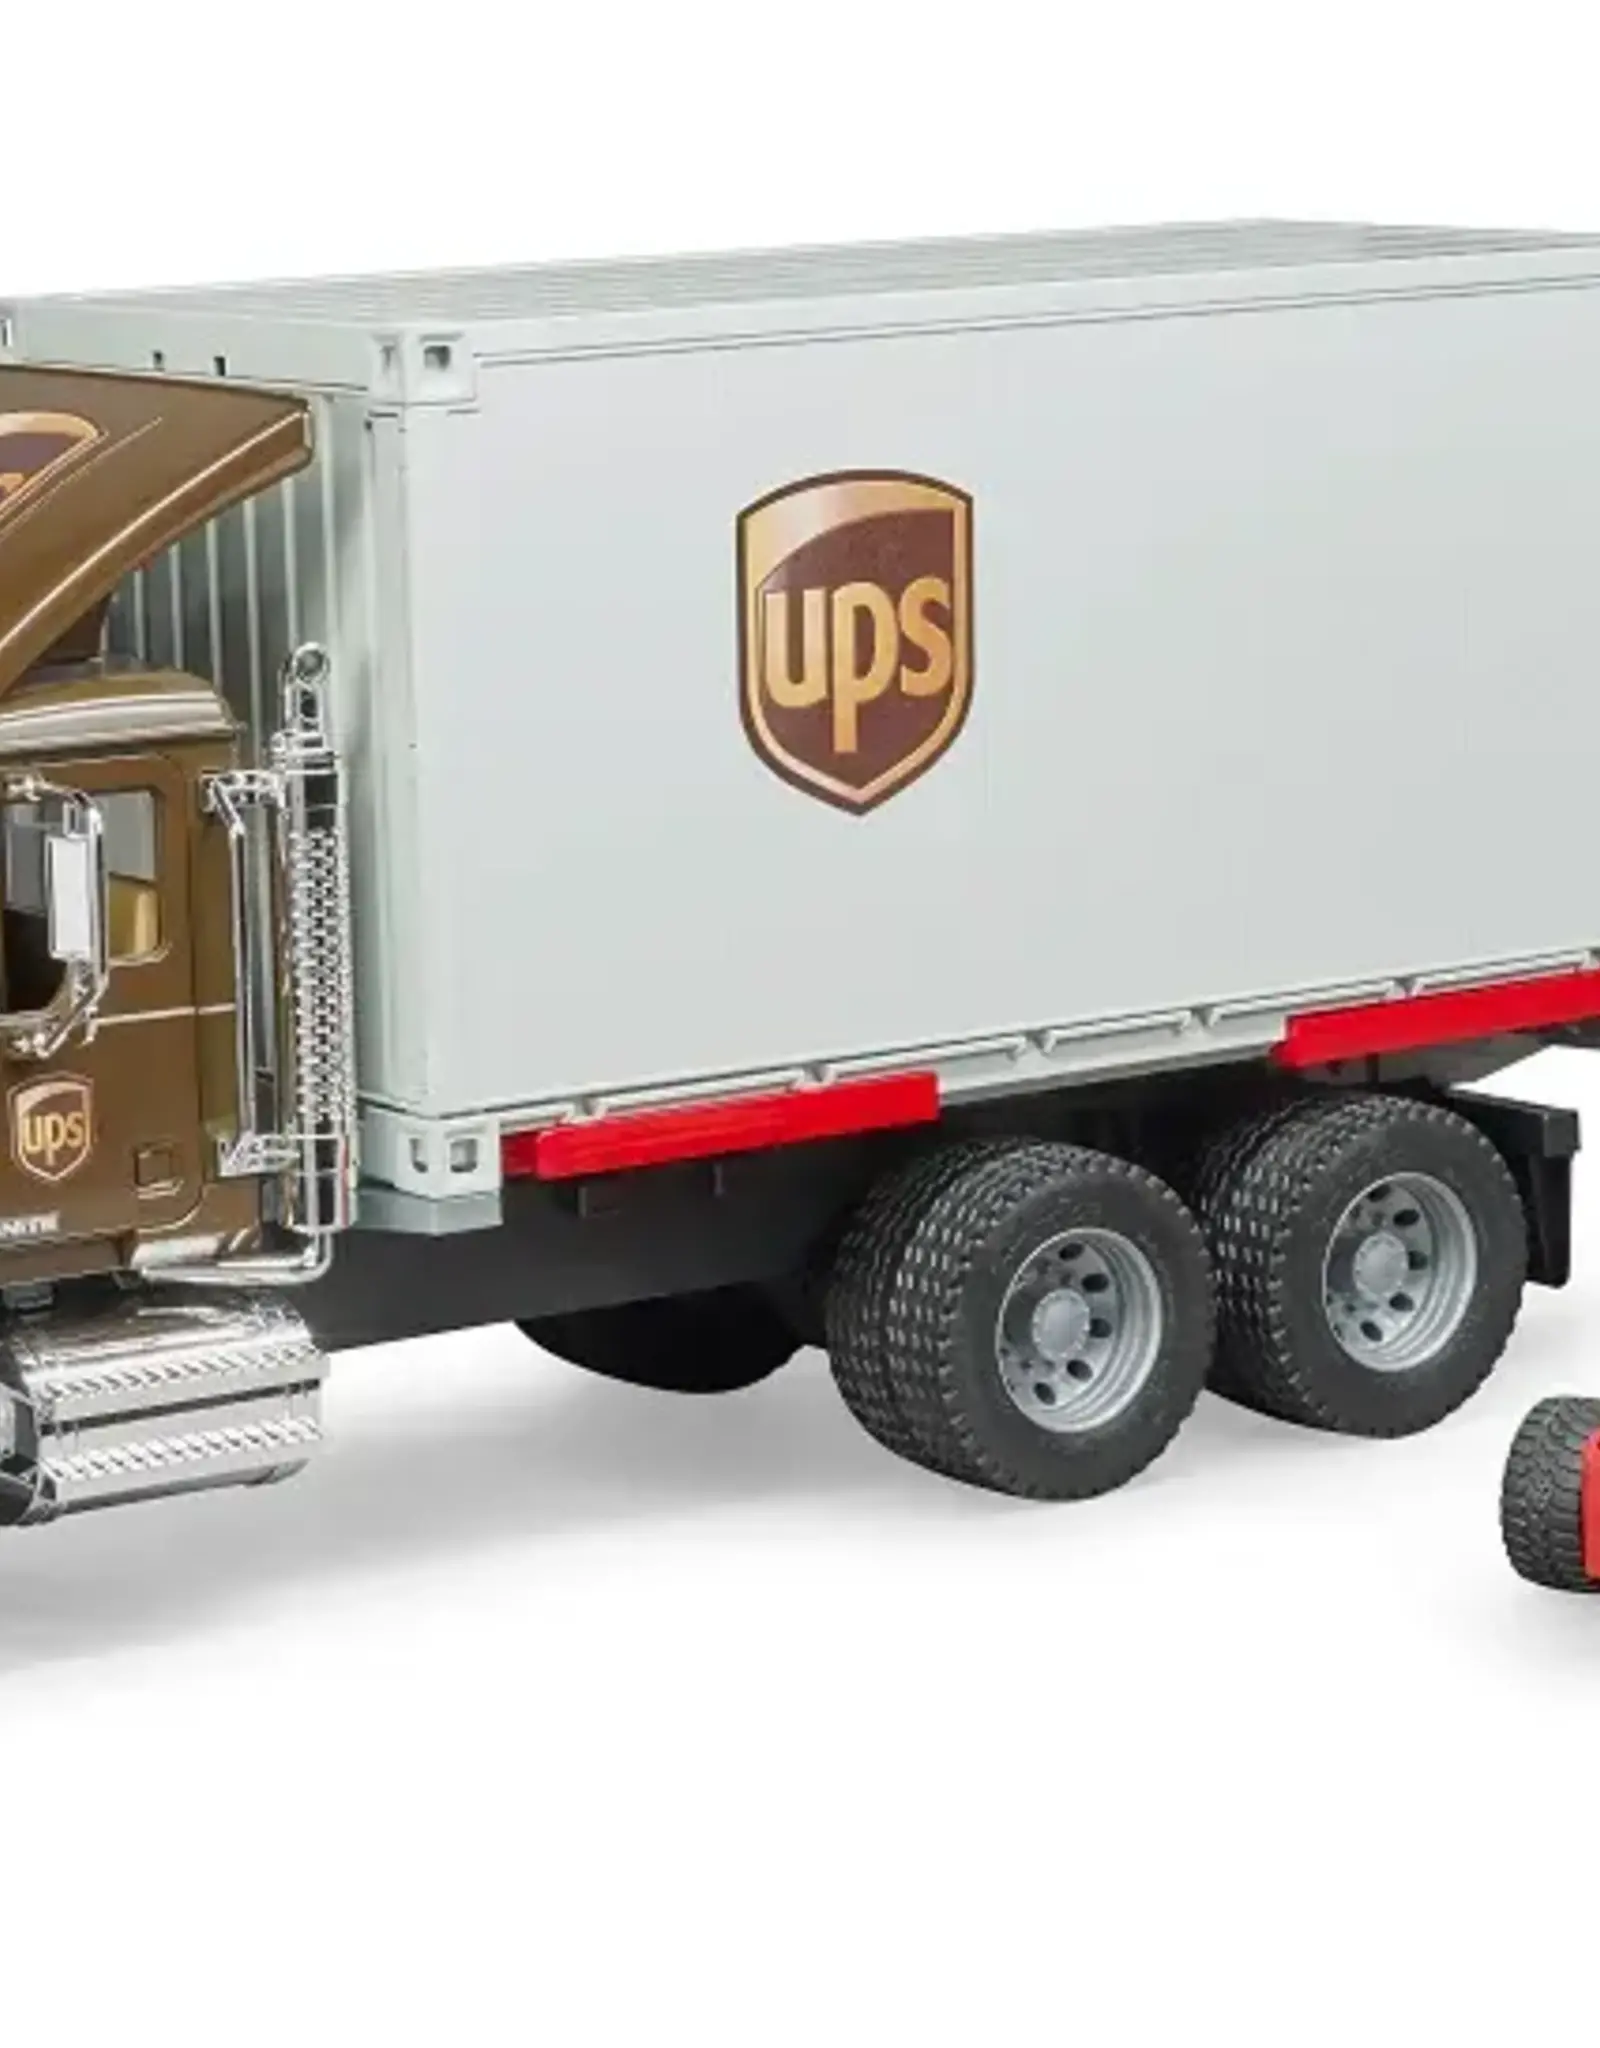 MACK Granite UPS logistics truck w/ forklift